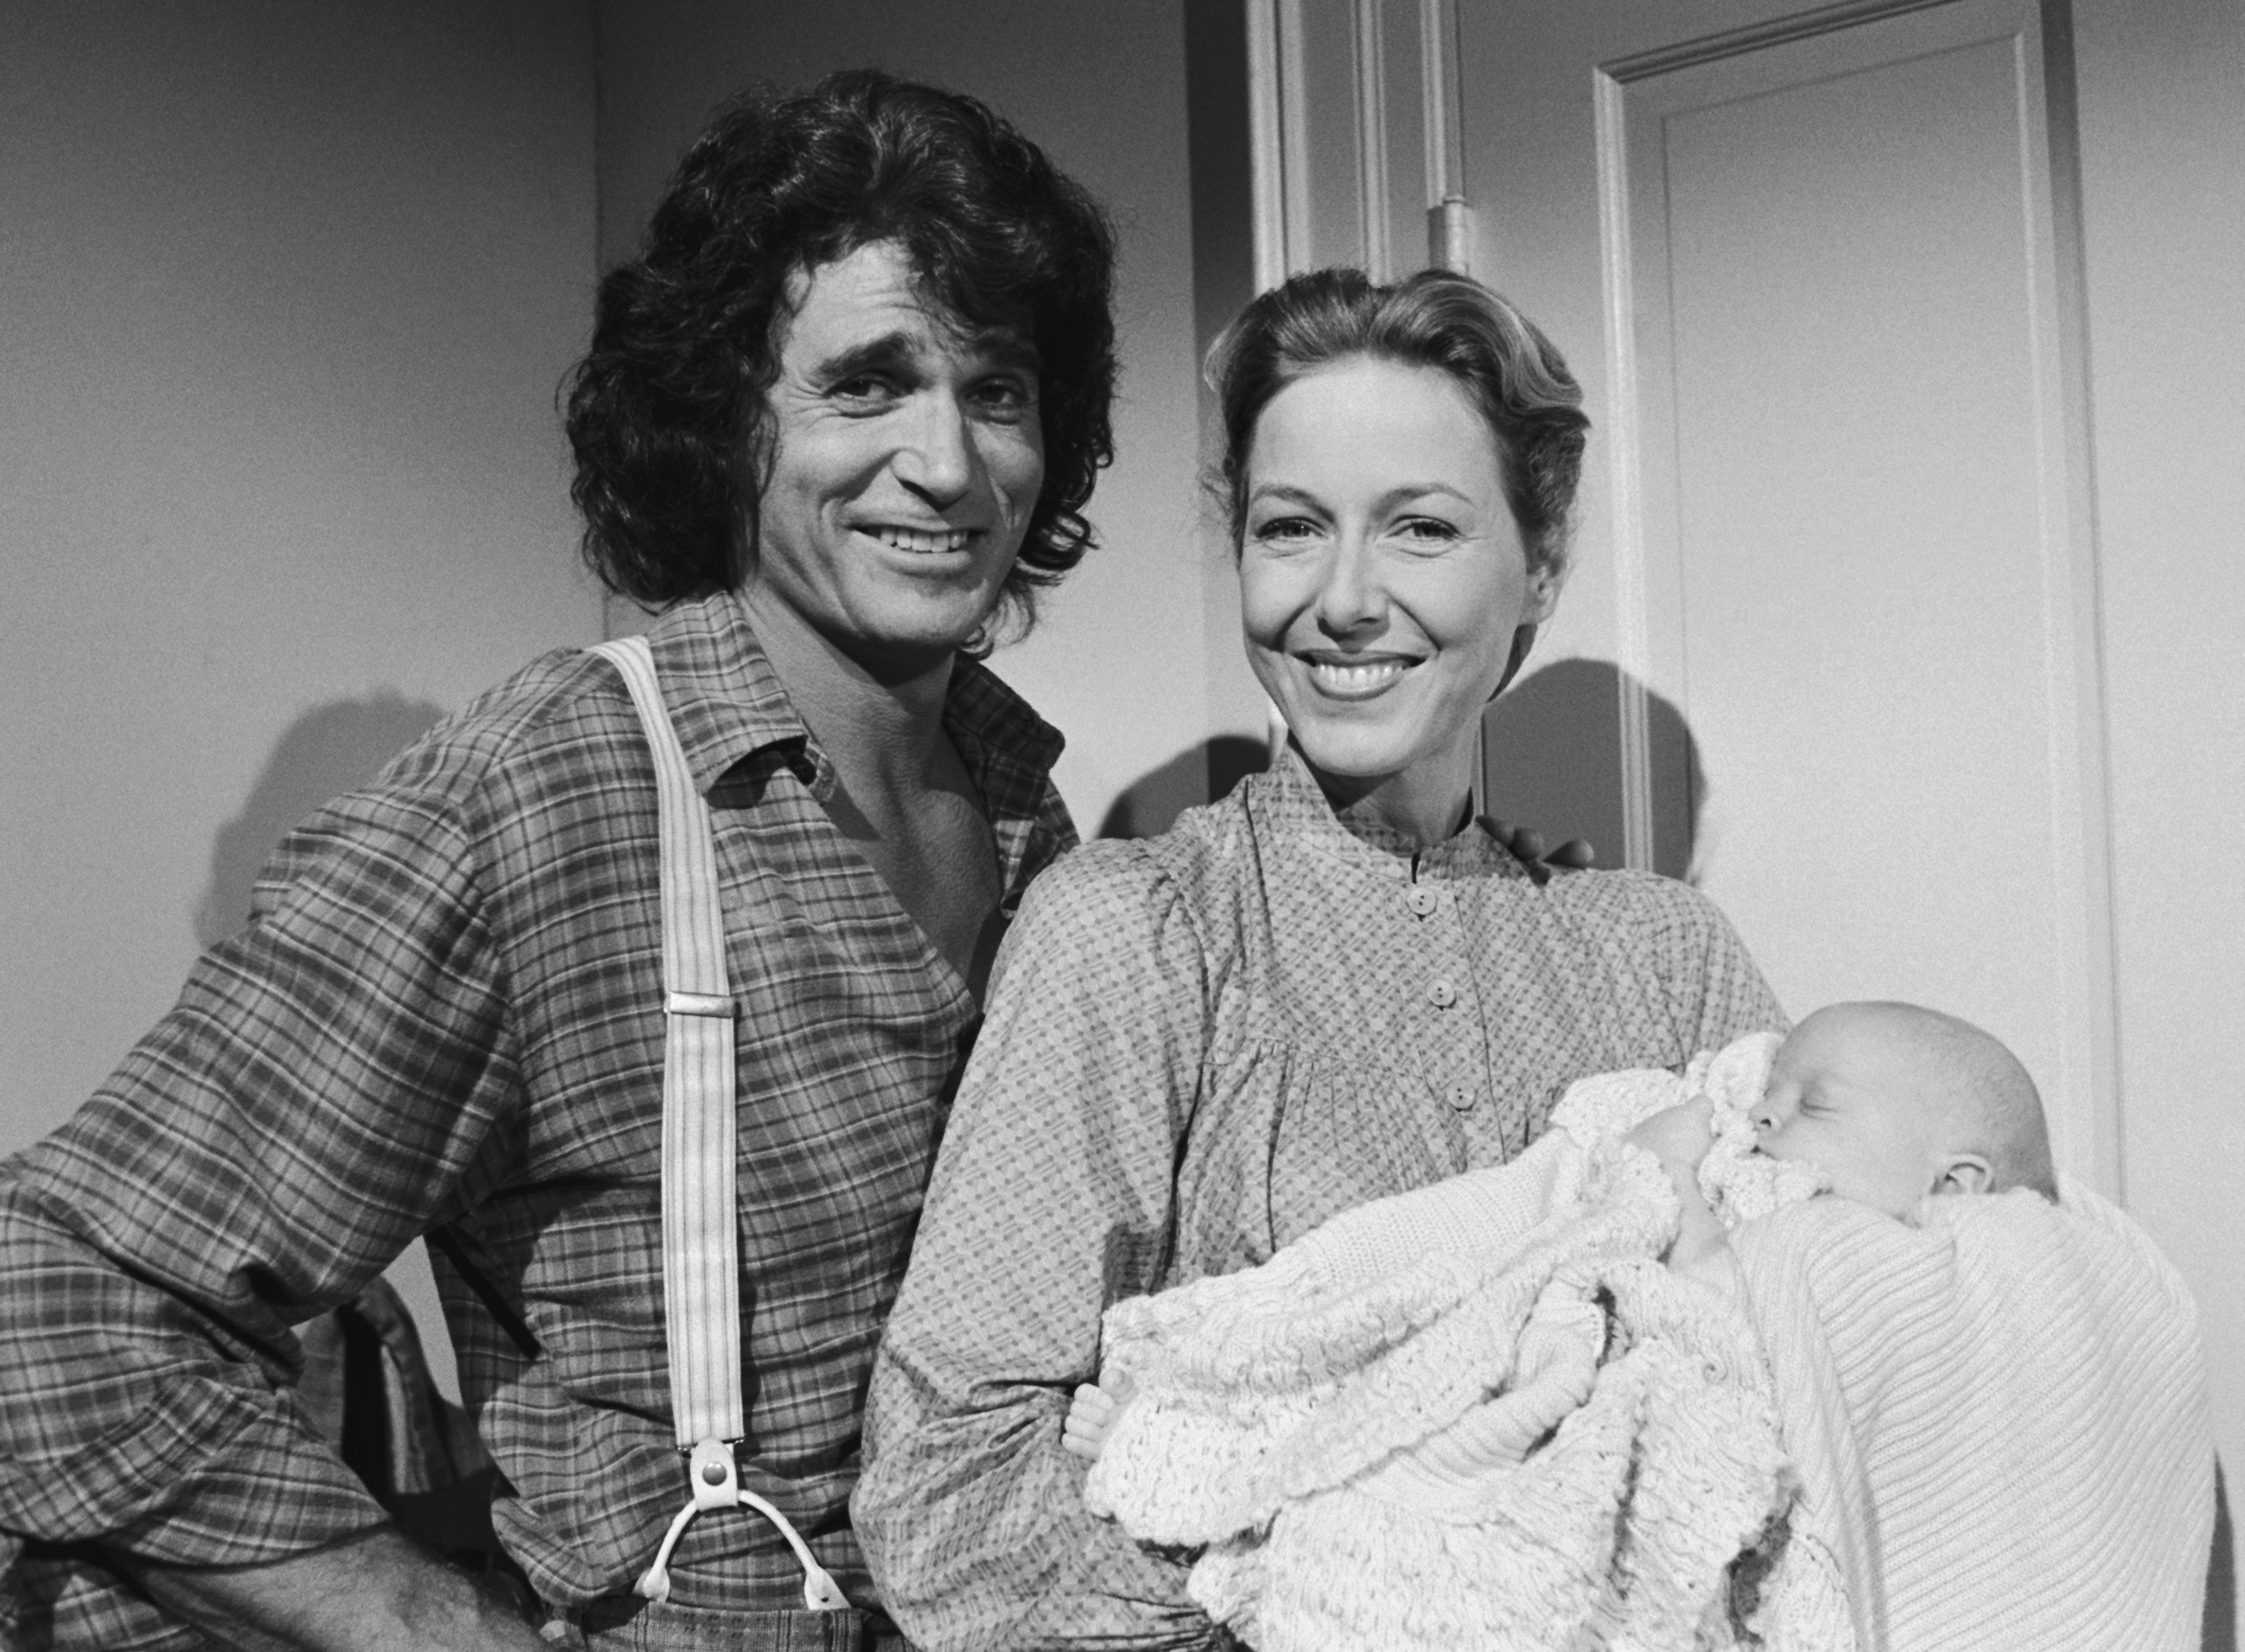 Michael Landon, left, with Karen Grassle in 'Little House on the Prairie', 1979